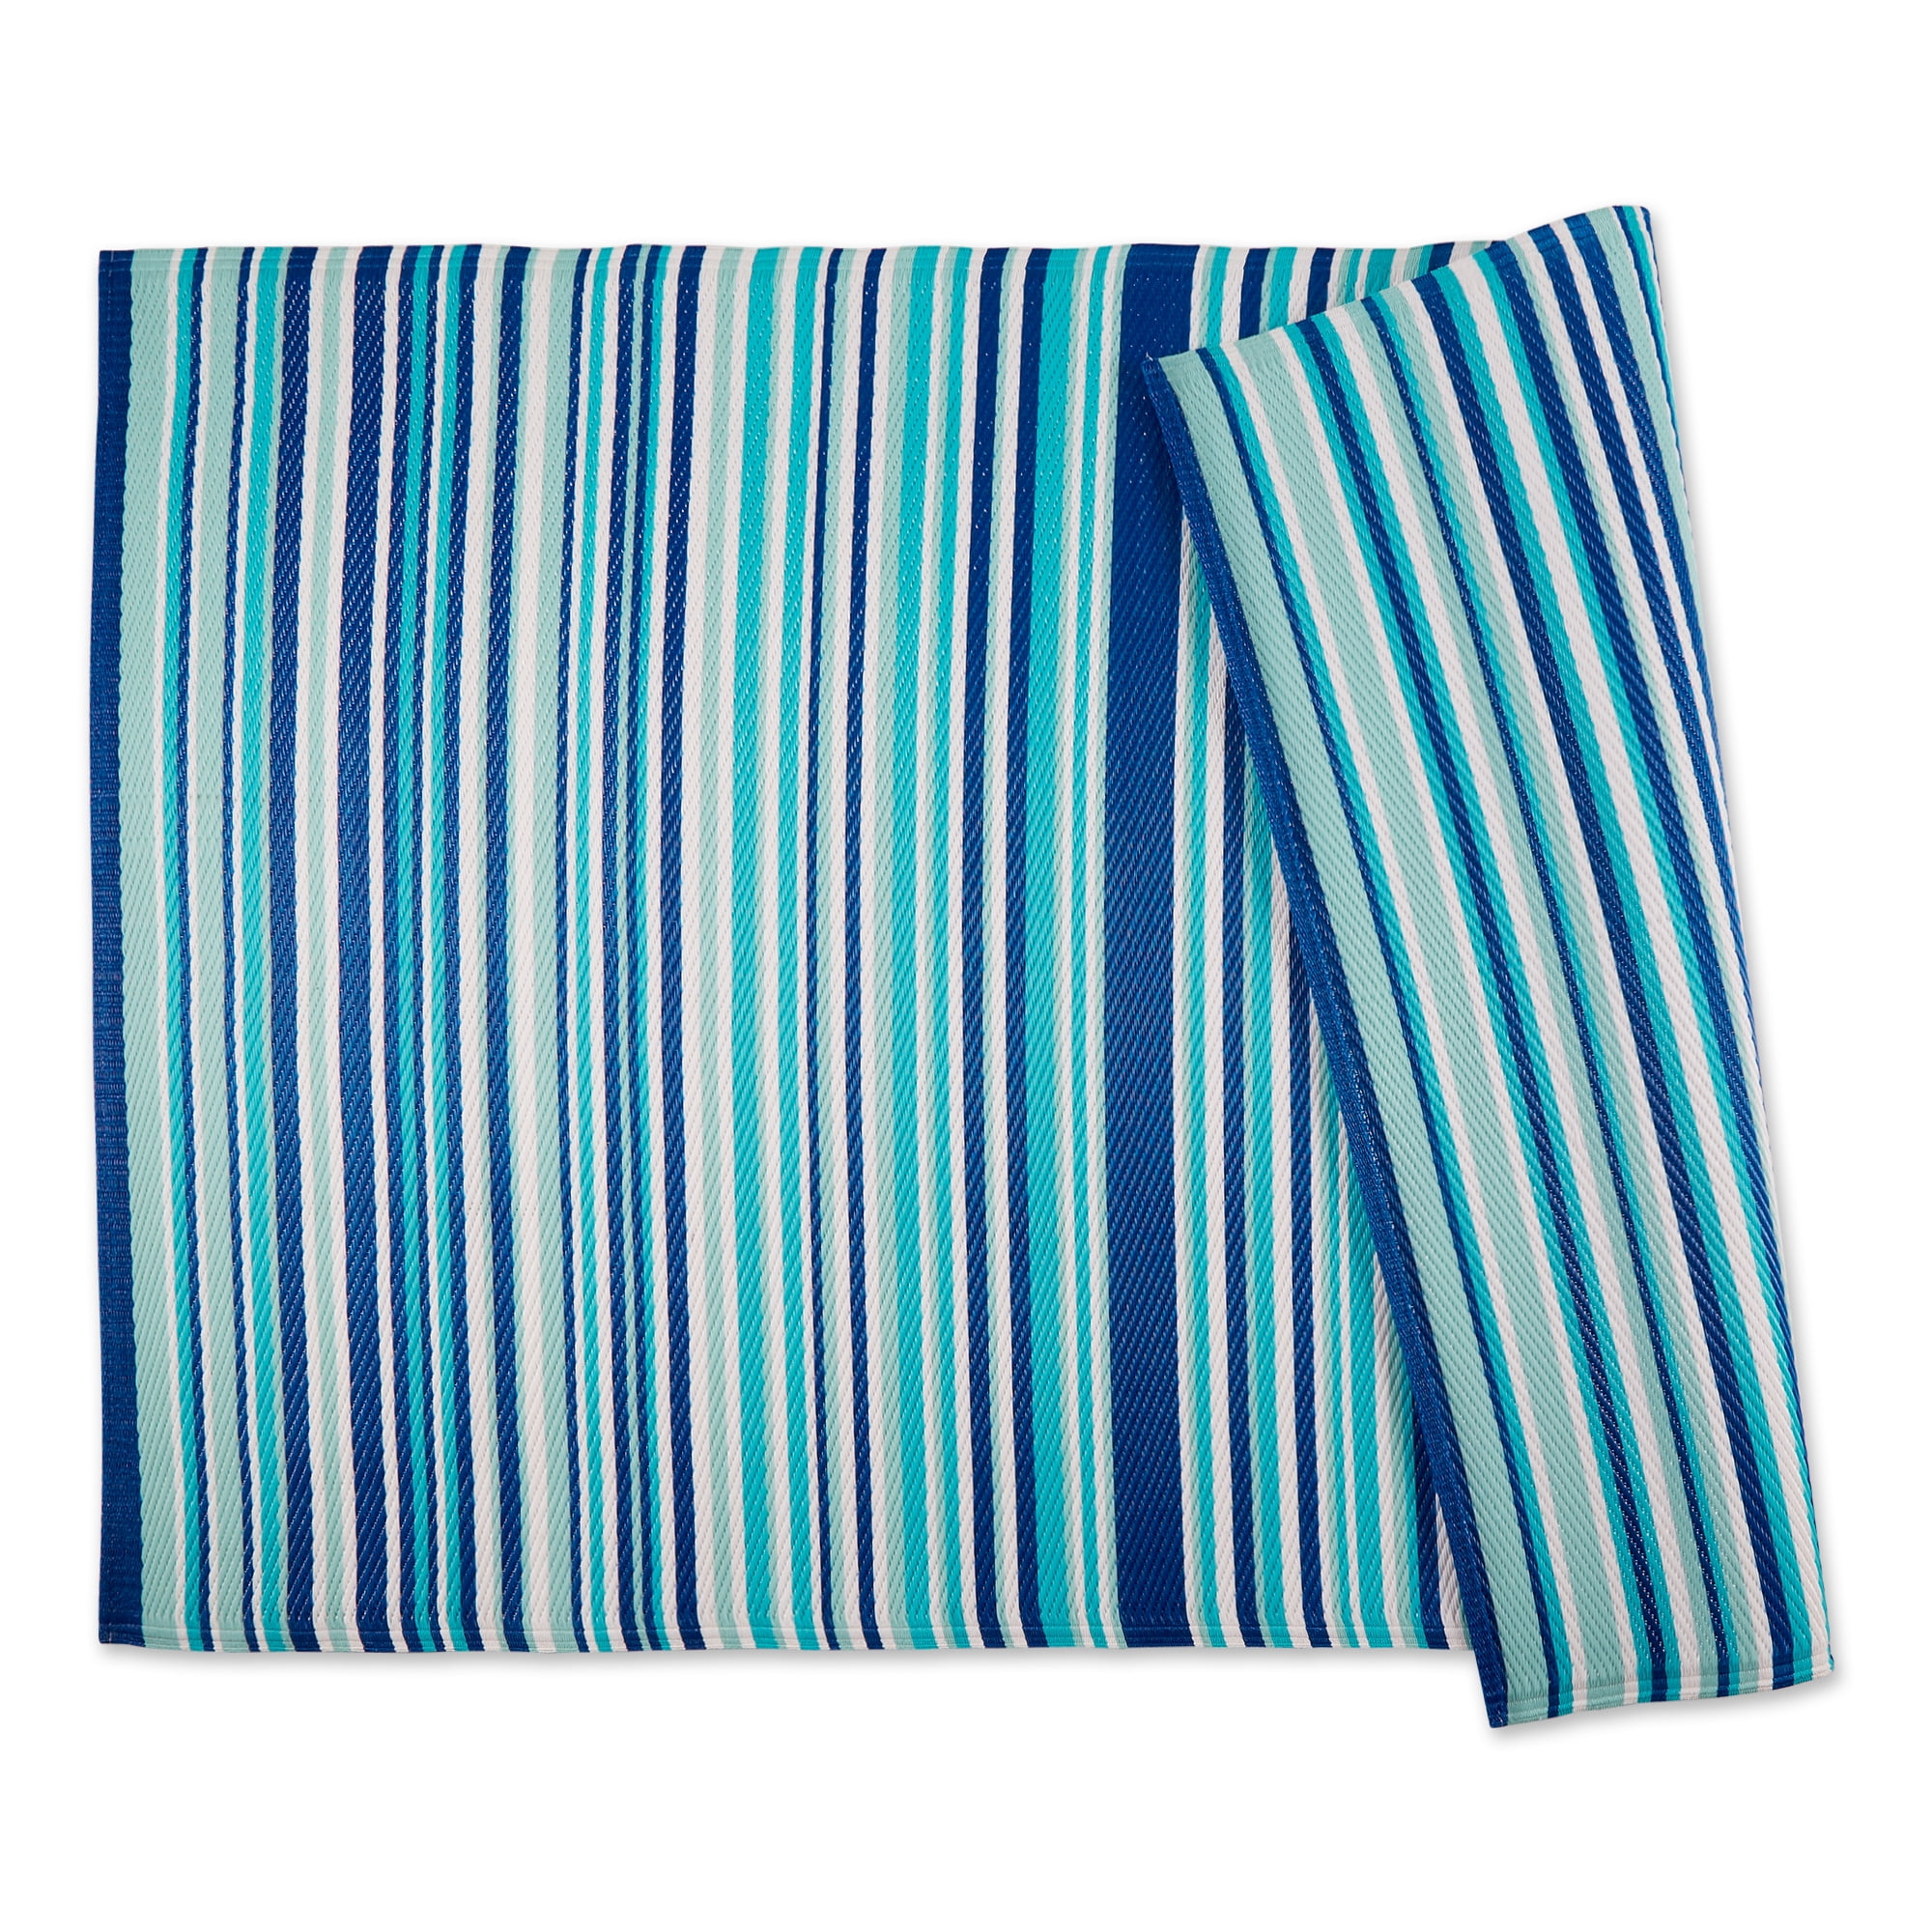 Blue Multi Tone Stripe Outdoor Rug 4x6 Ft - Walmart.com